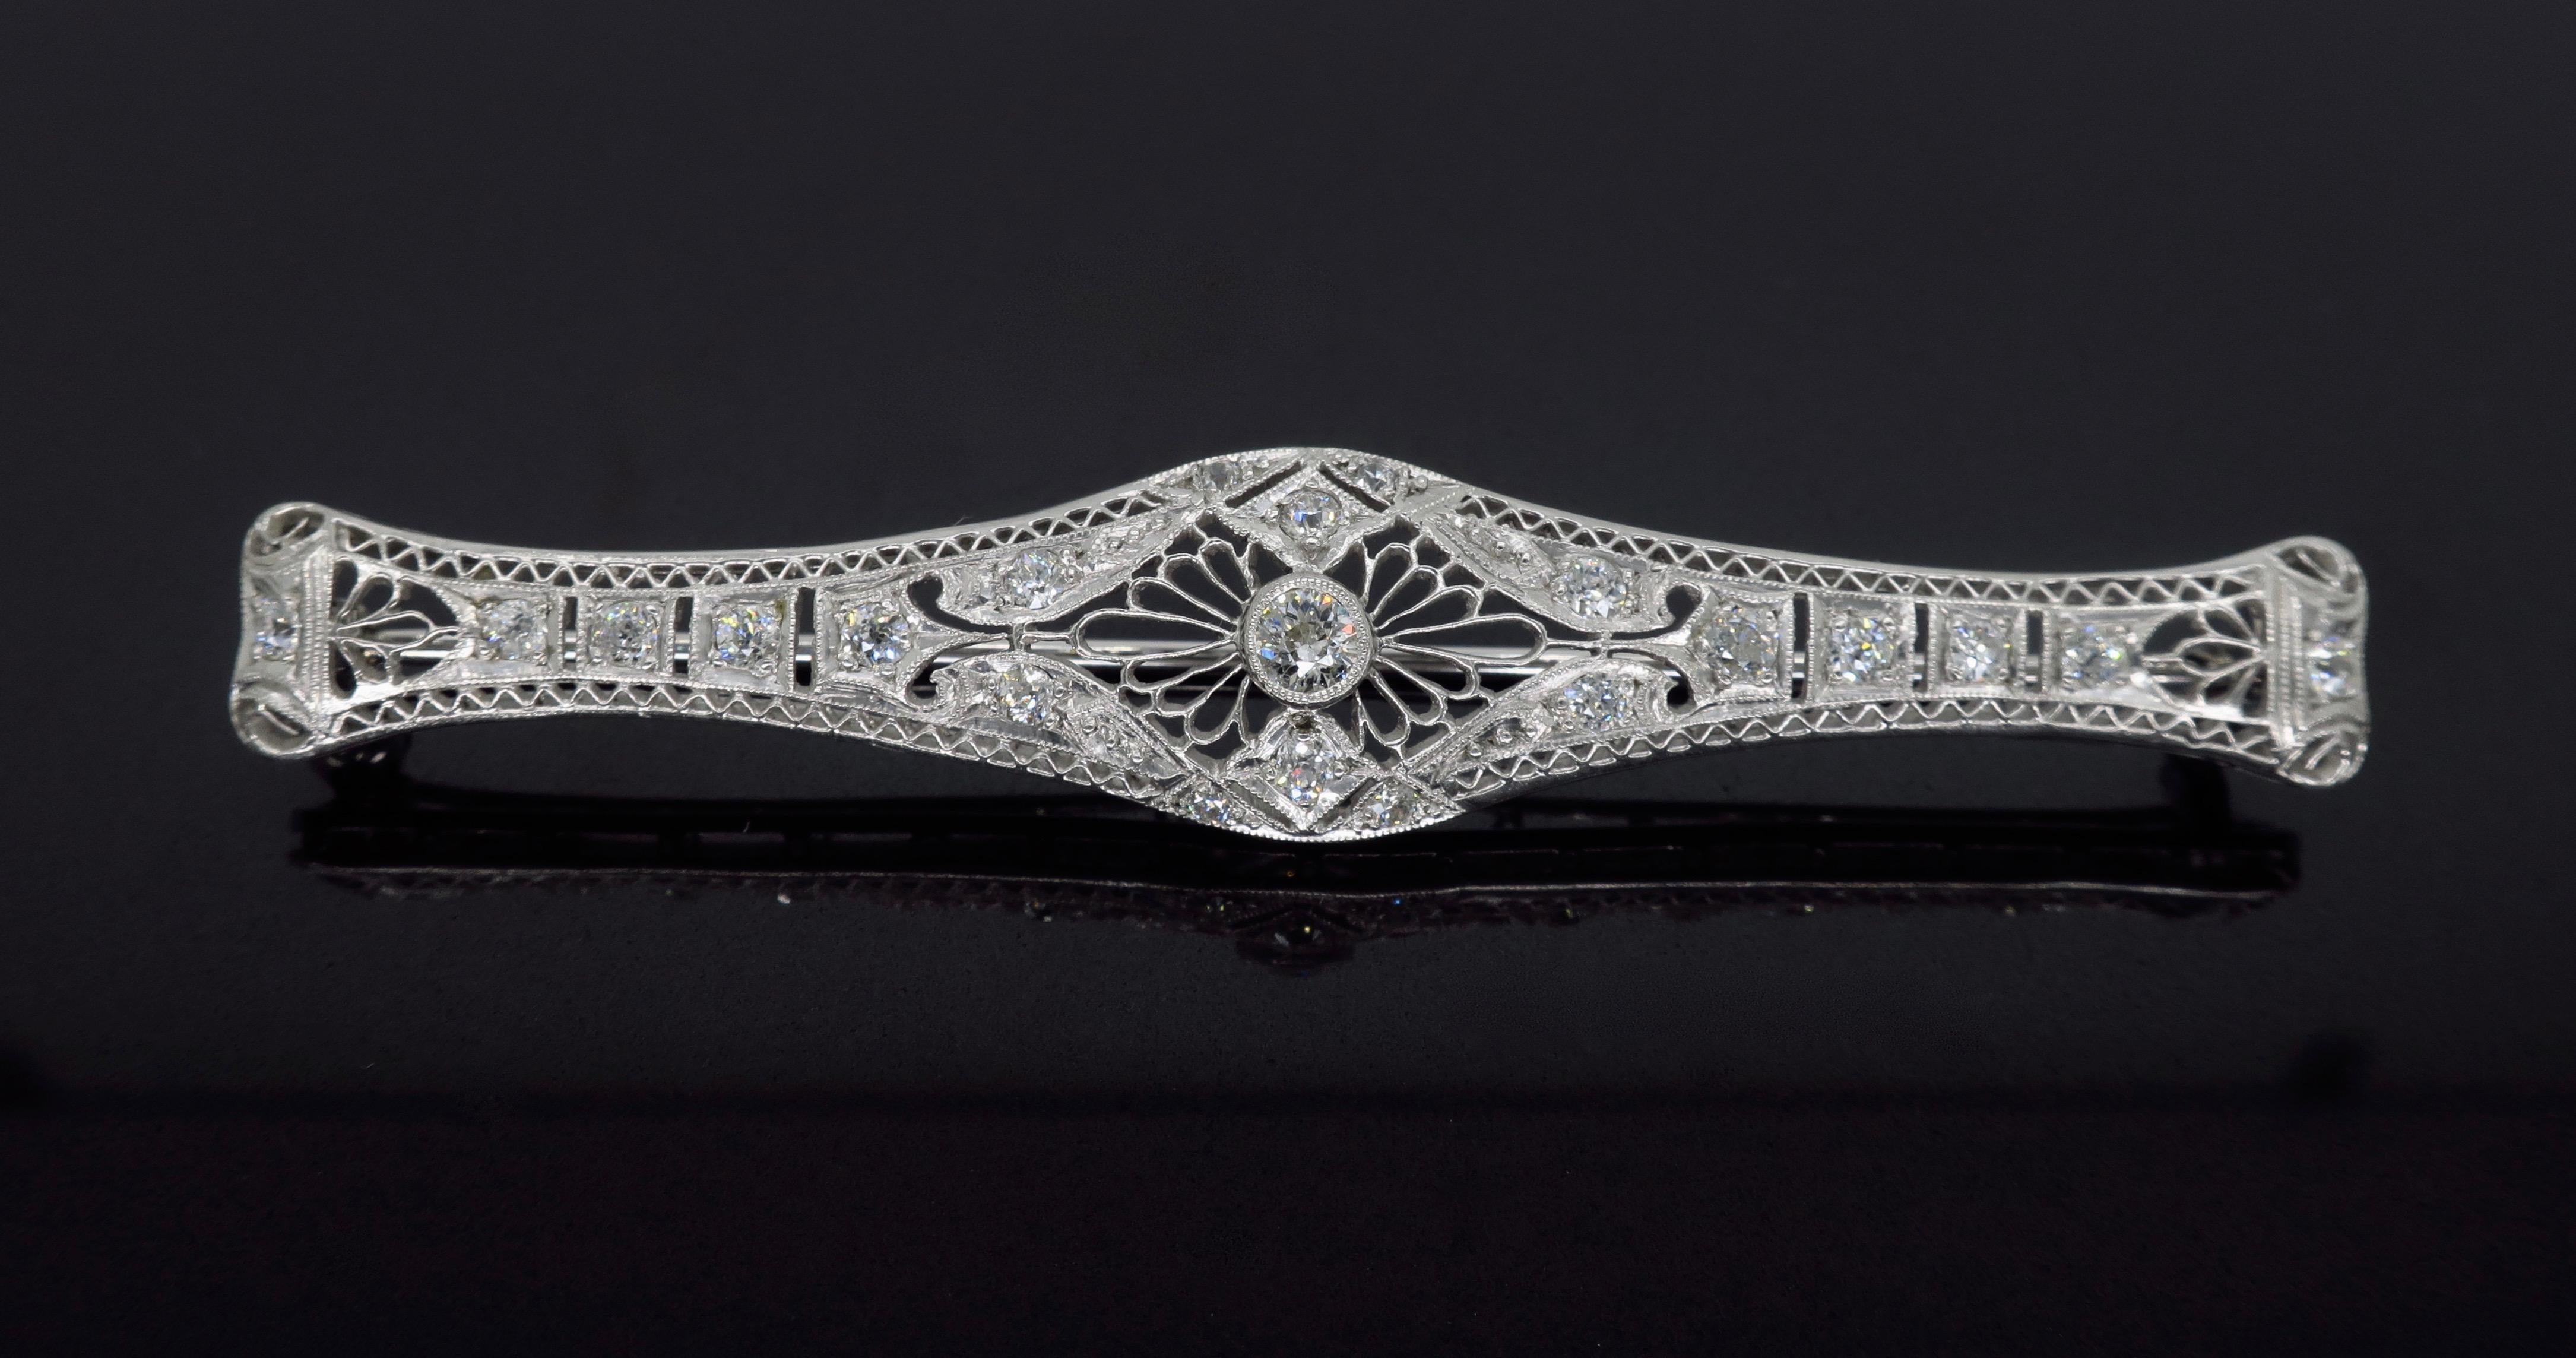 Vintage diamond bar brooch crafted in platinum.

Diamond Carat Weight: Approximately .59CTW
Diamond Cut: Old European Cut Diamonds
Color: Average G-J
Clarity: Average VS-SI
Metal: Platinum
Marked/Tested: Tested Platinum
Weight: 8.1 Grams
Length: